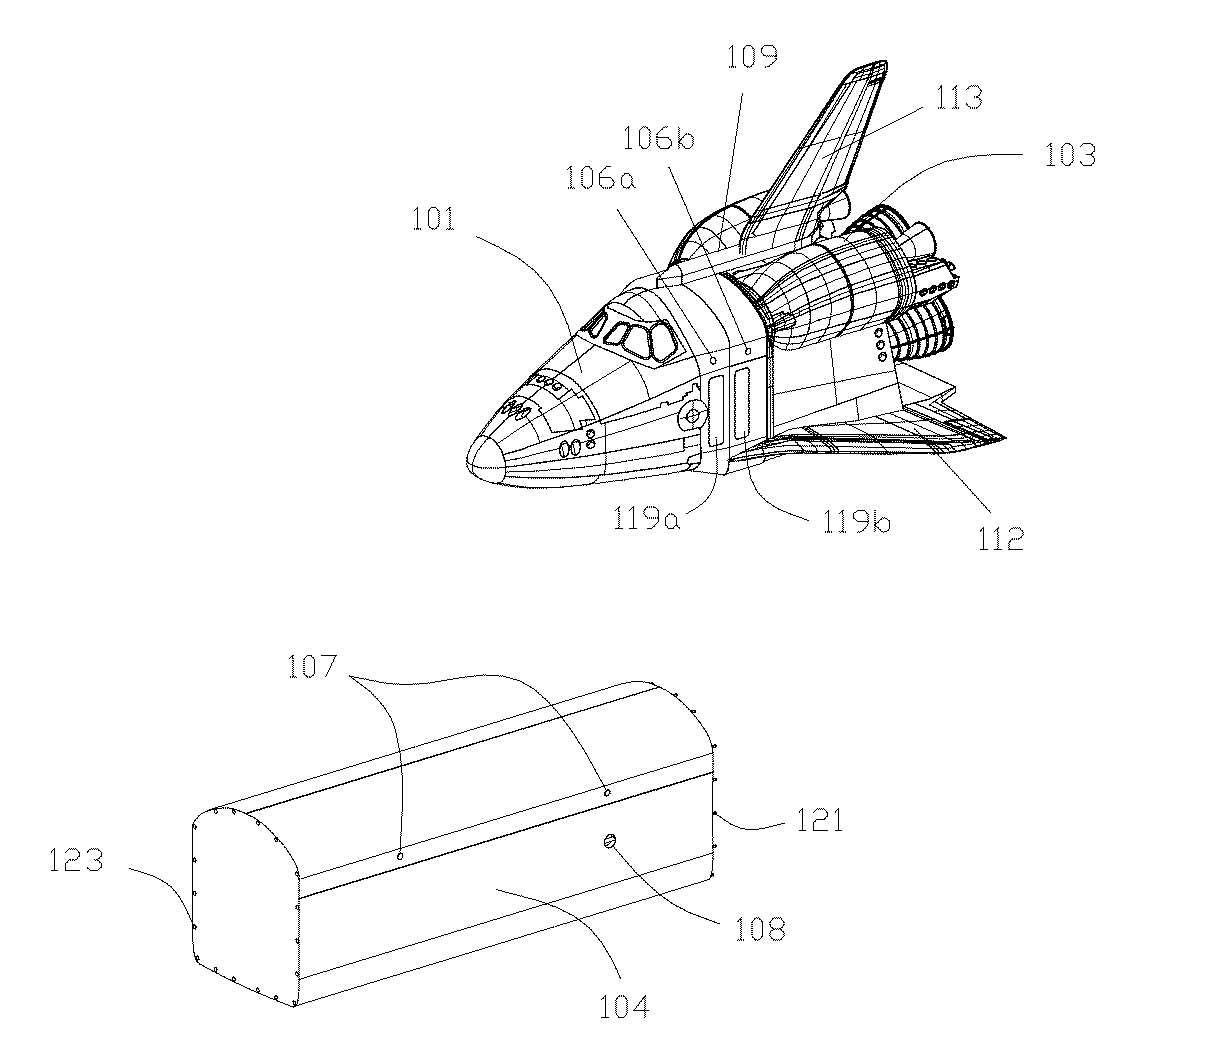 Space shuttle orbiter and return system